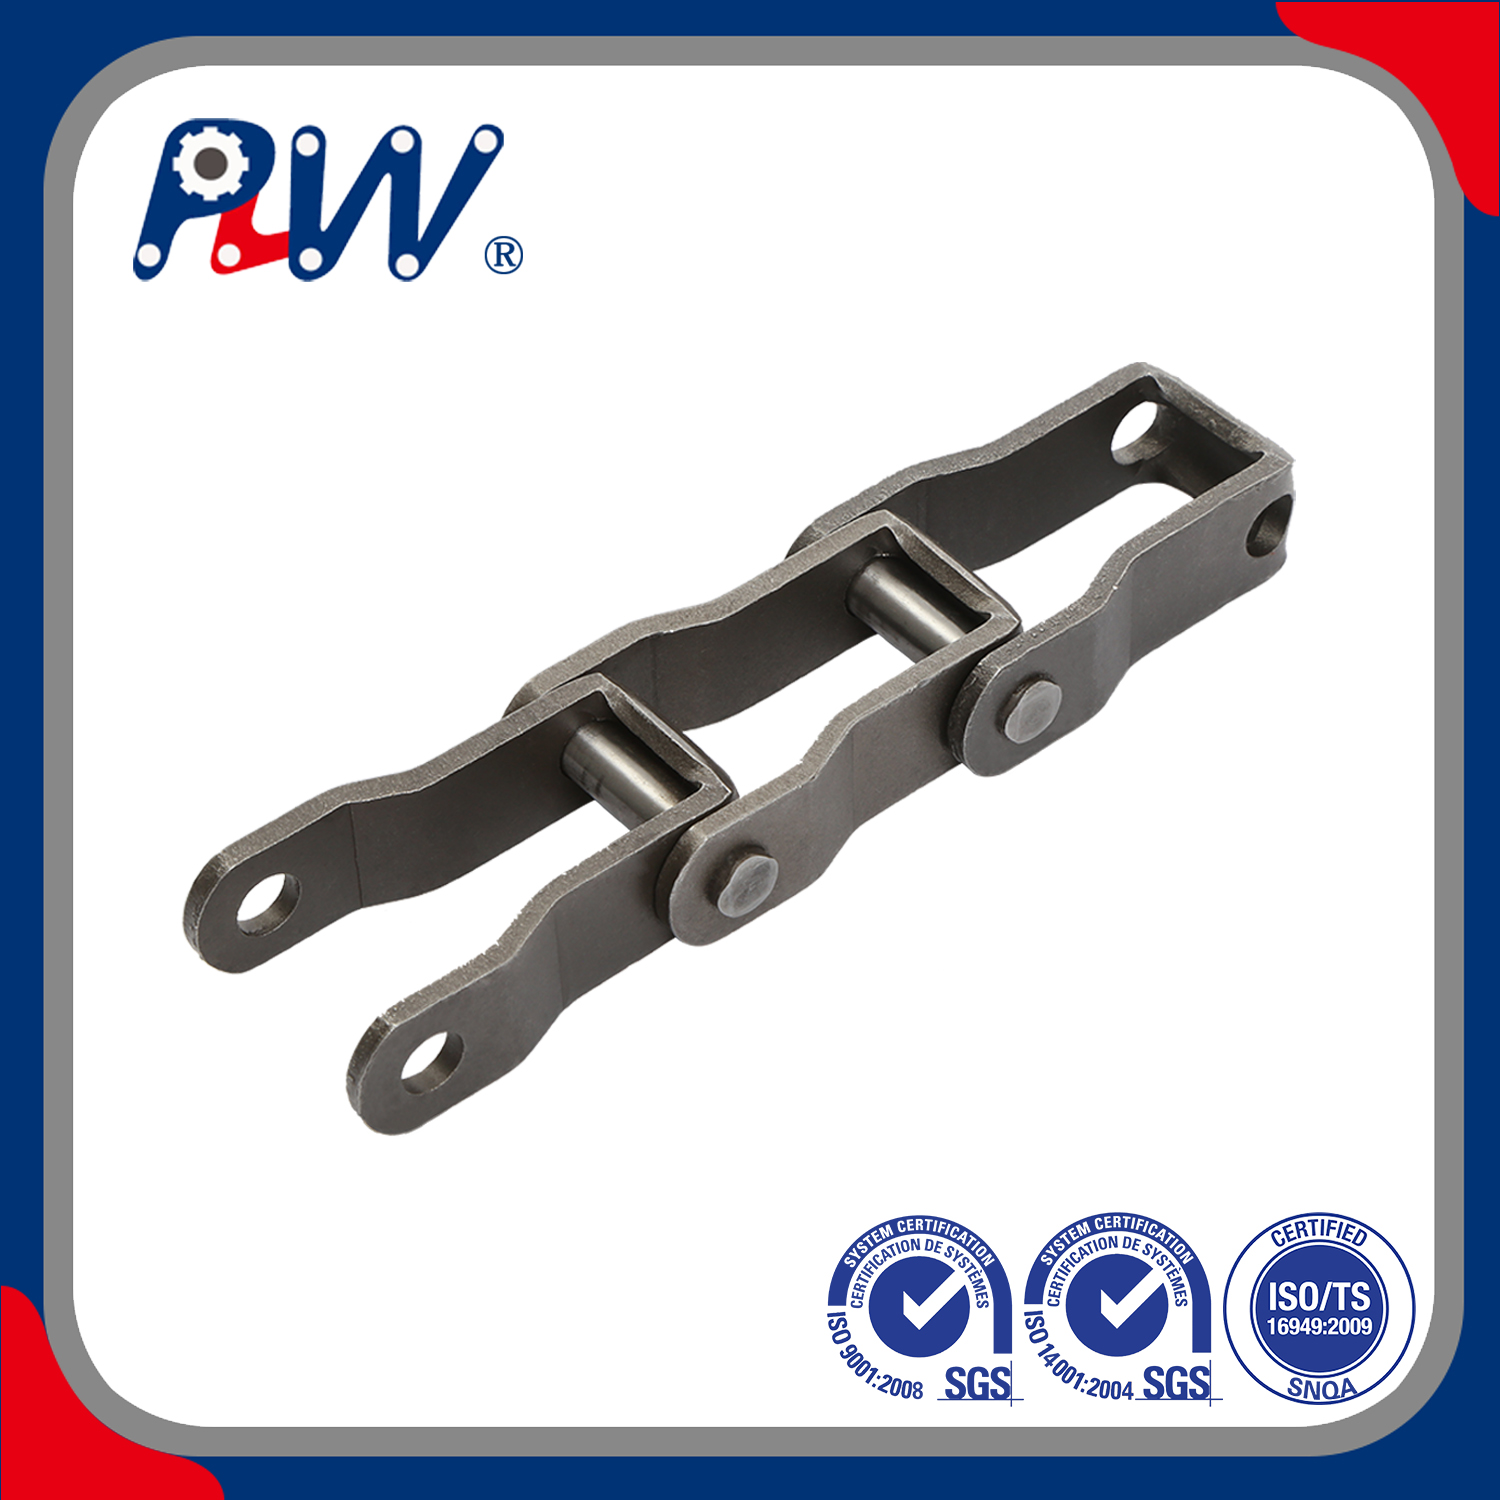 Steel Pintle Conveyor Chain with Long Life (667J)